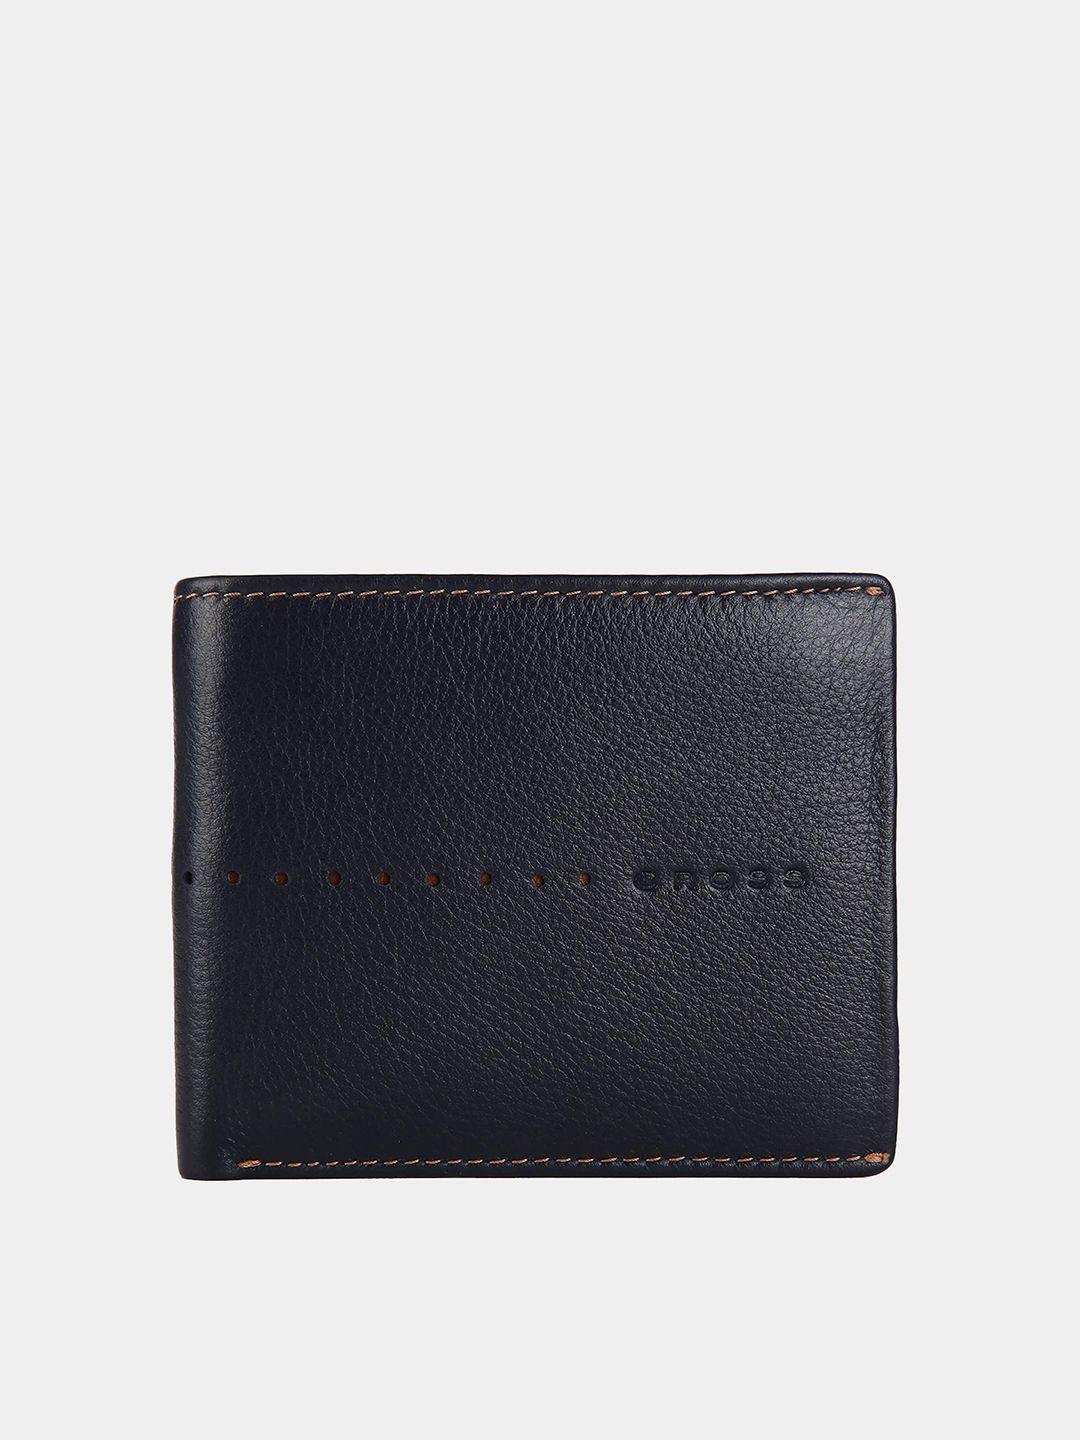 cross men black textured leather two fold wallet